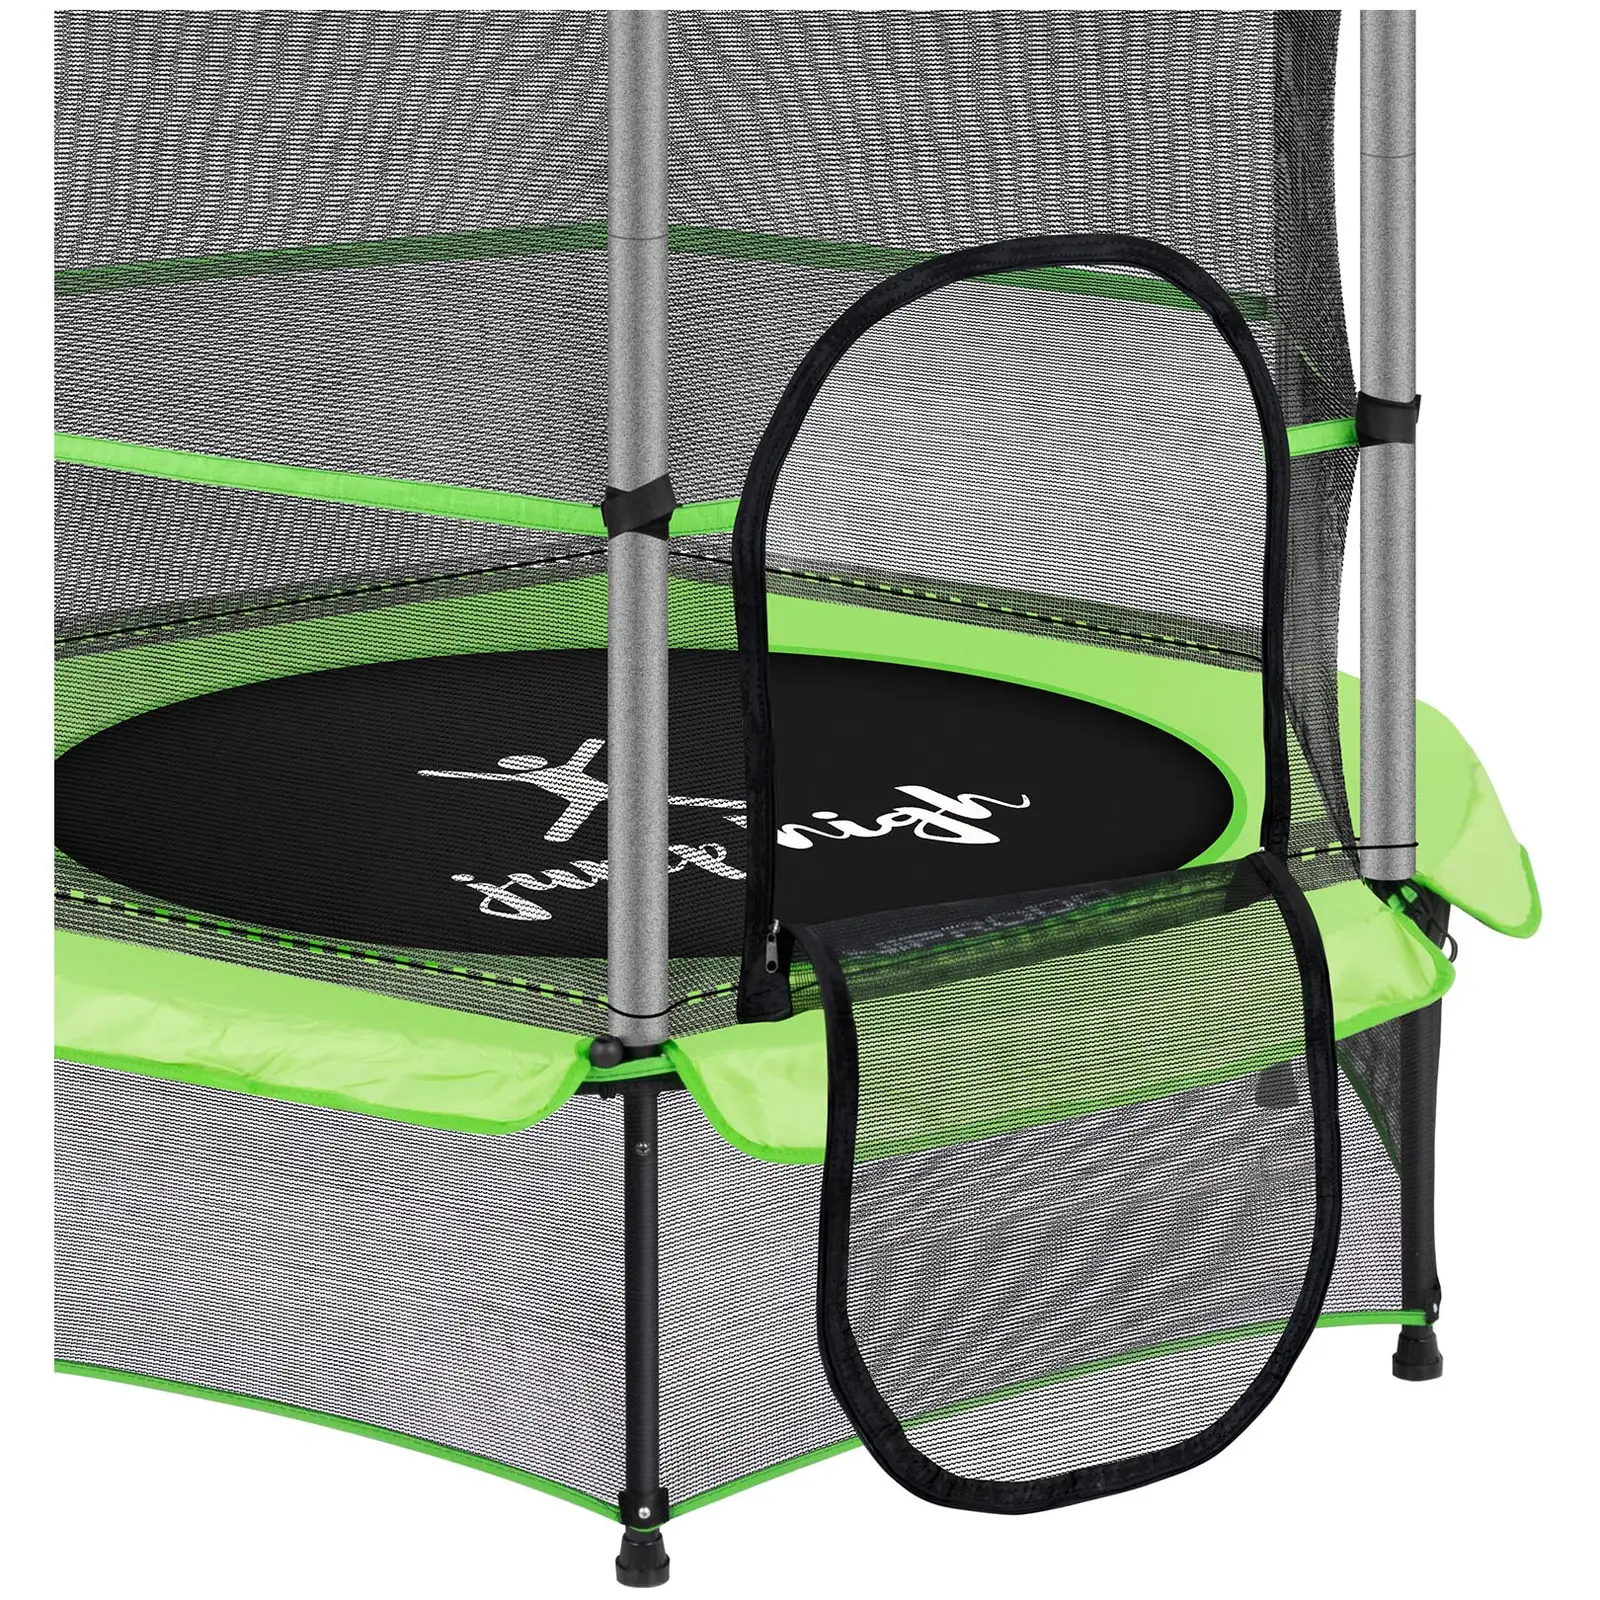 Kid's Trampoline - with safety net - 140 cm - 50 kg - green